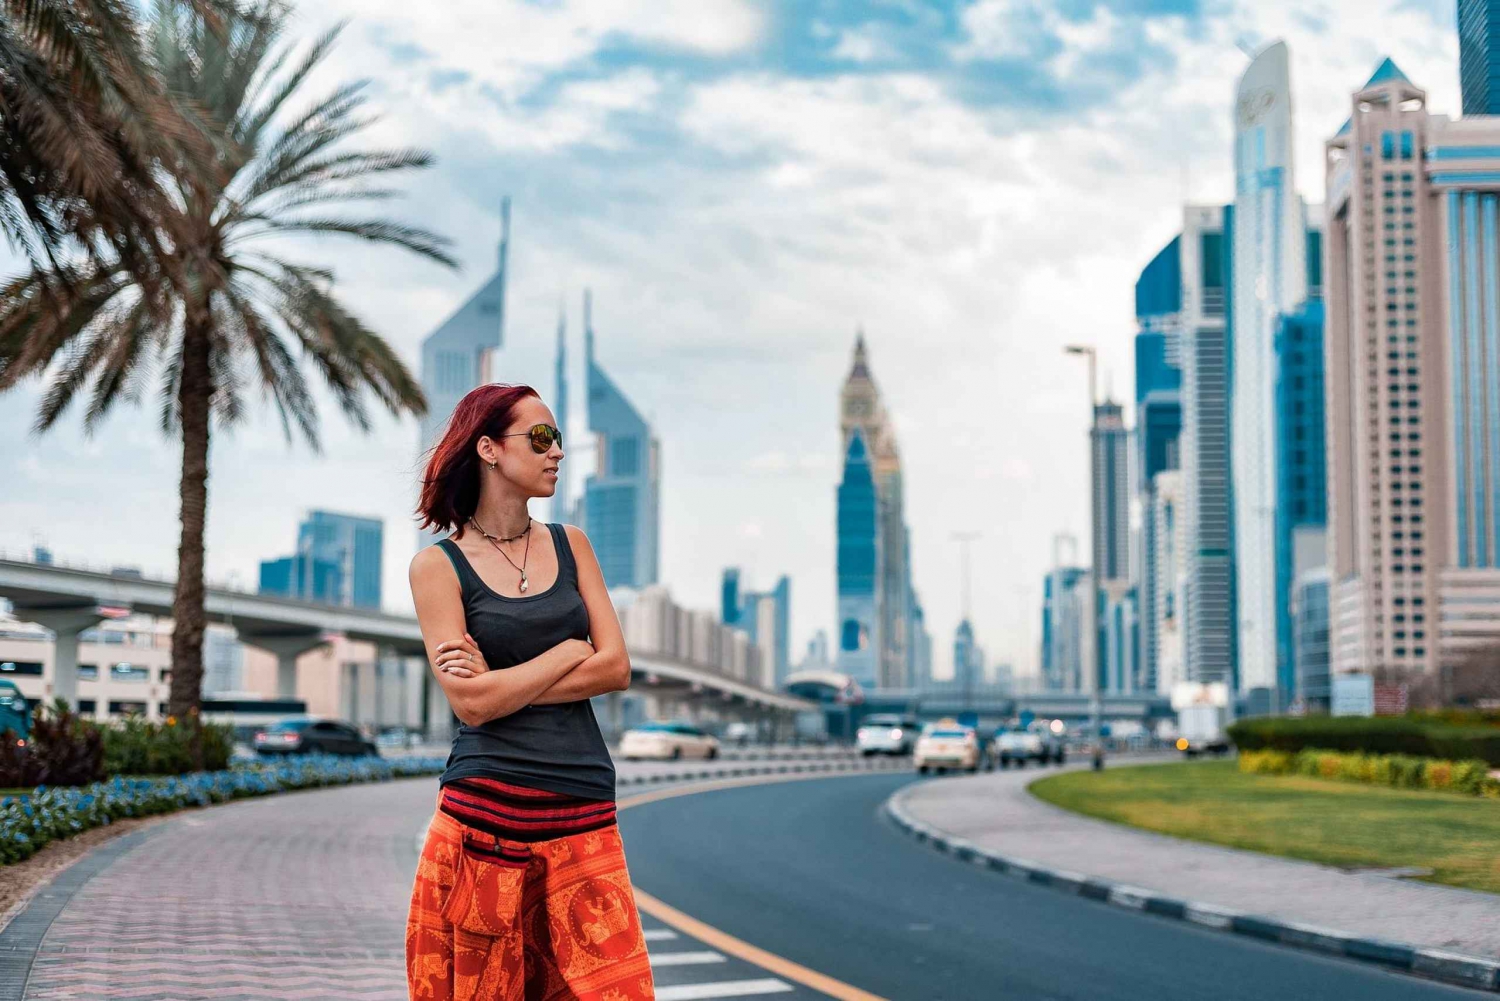 Dubai: 4-Hour Tour with Burj Khalifa Tickets